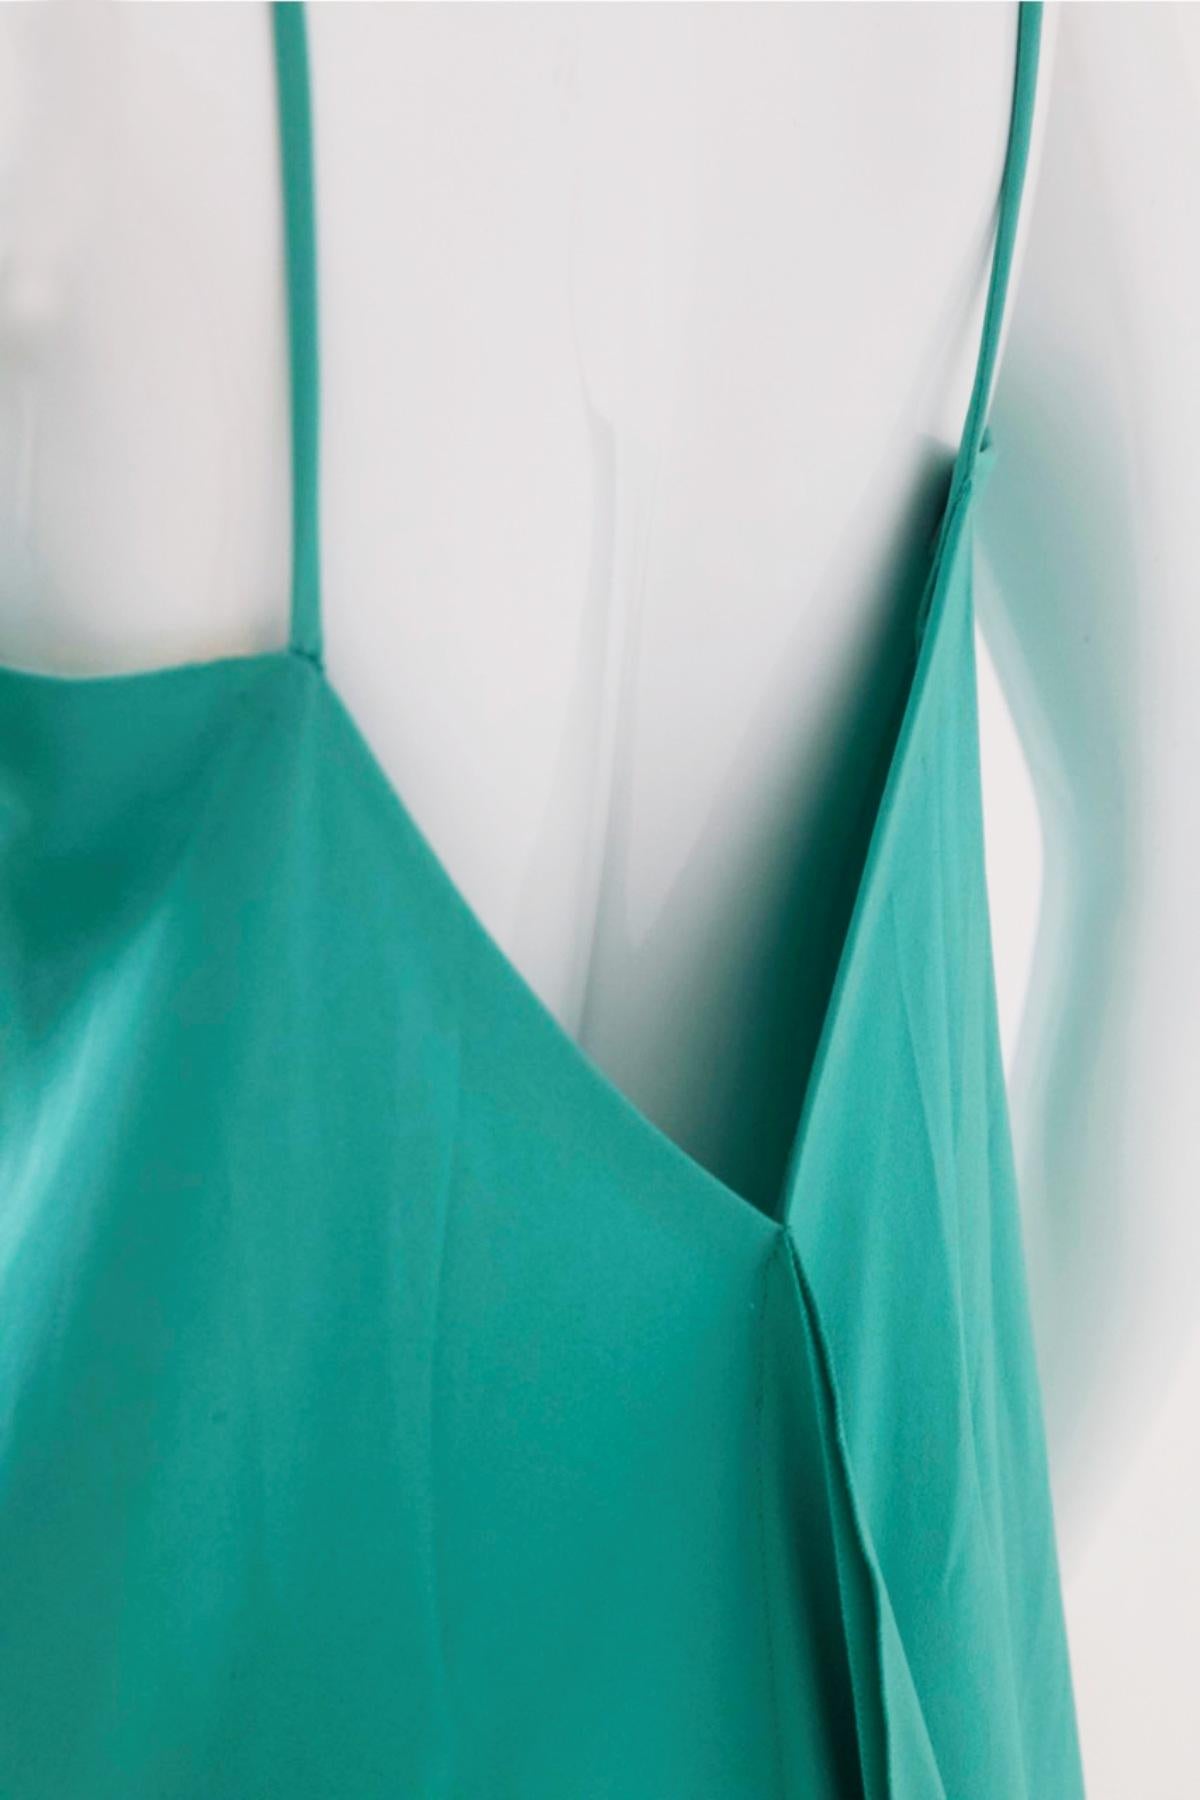 Pierre Cardin Vintage Teal Long Dress For Sale 1